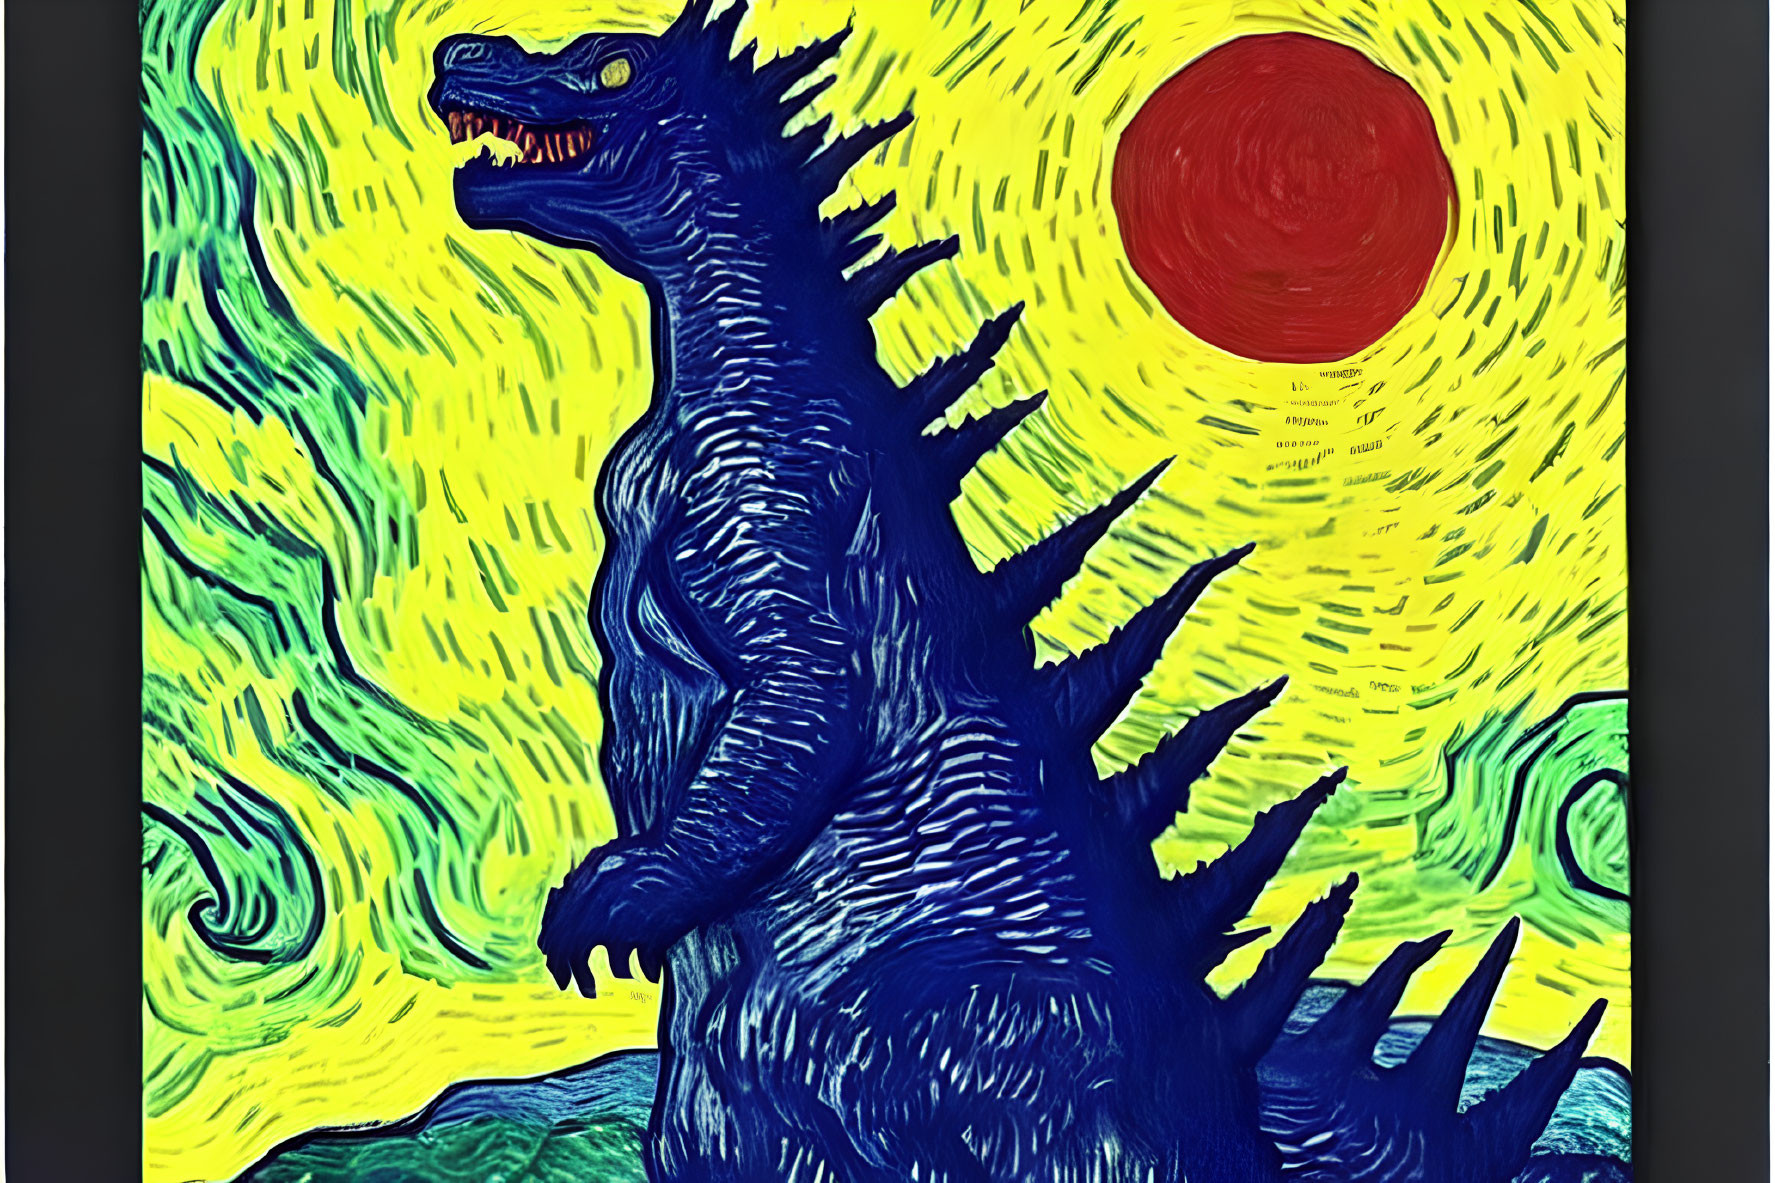 Godzilla figure styled like Van Gogh's "Starry Night" with swirling yellow patterns